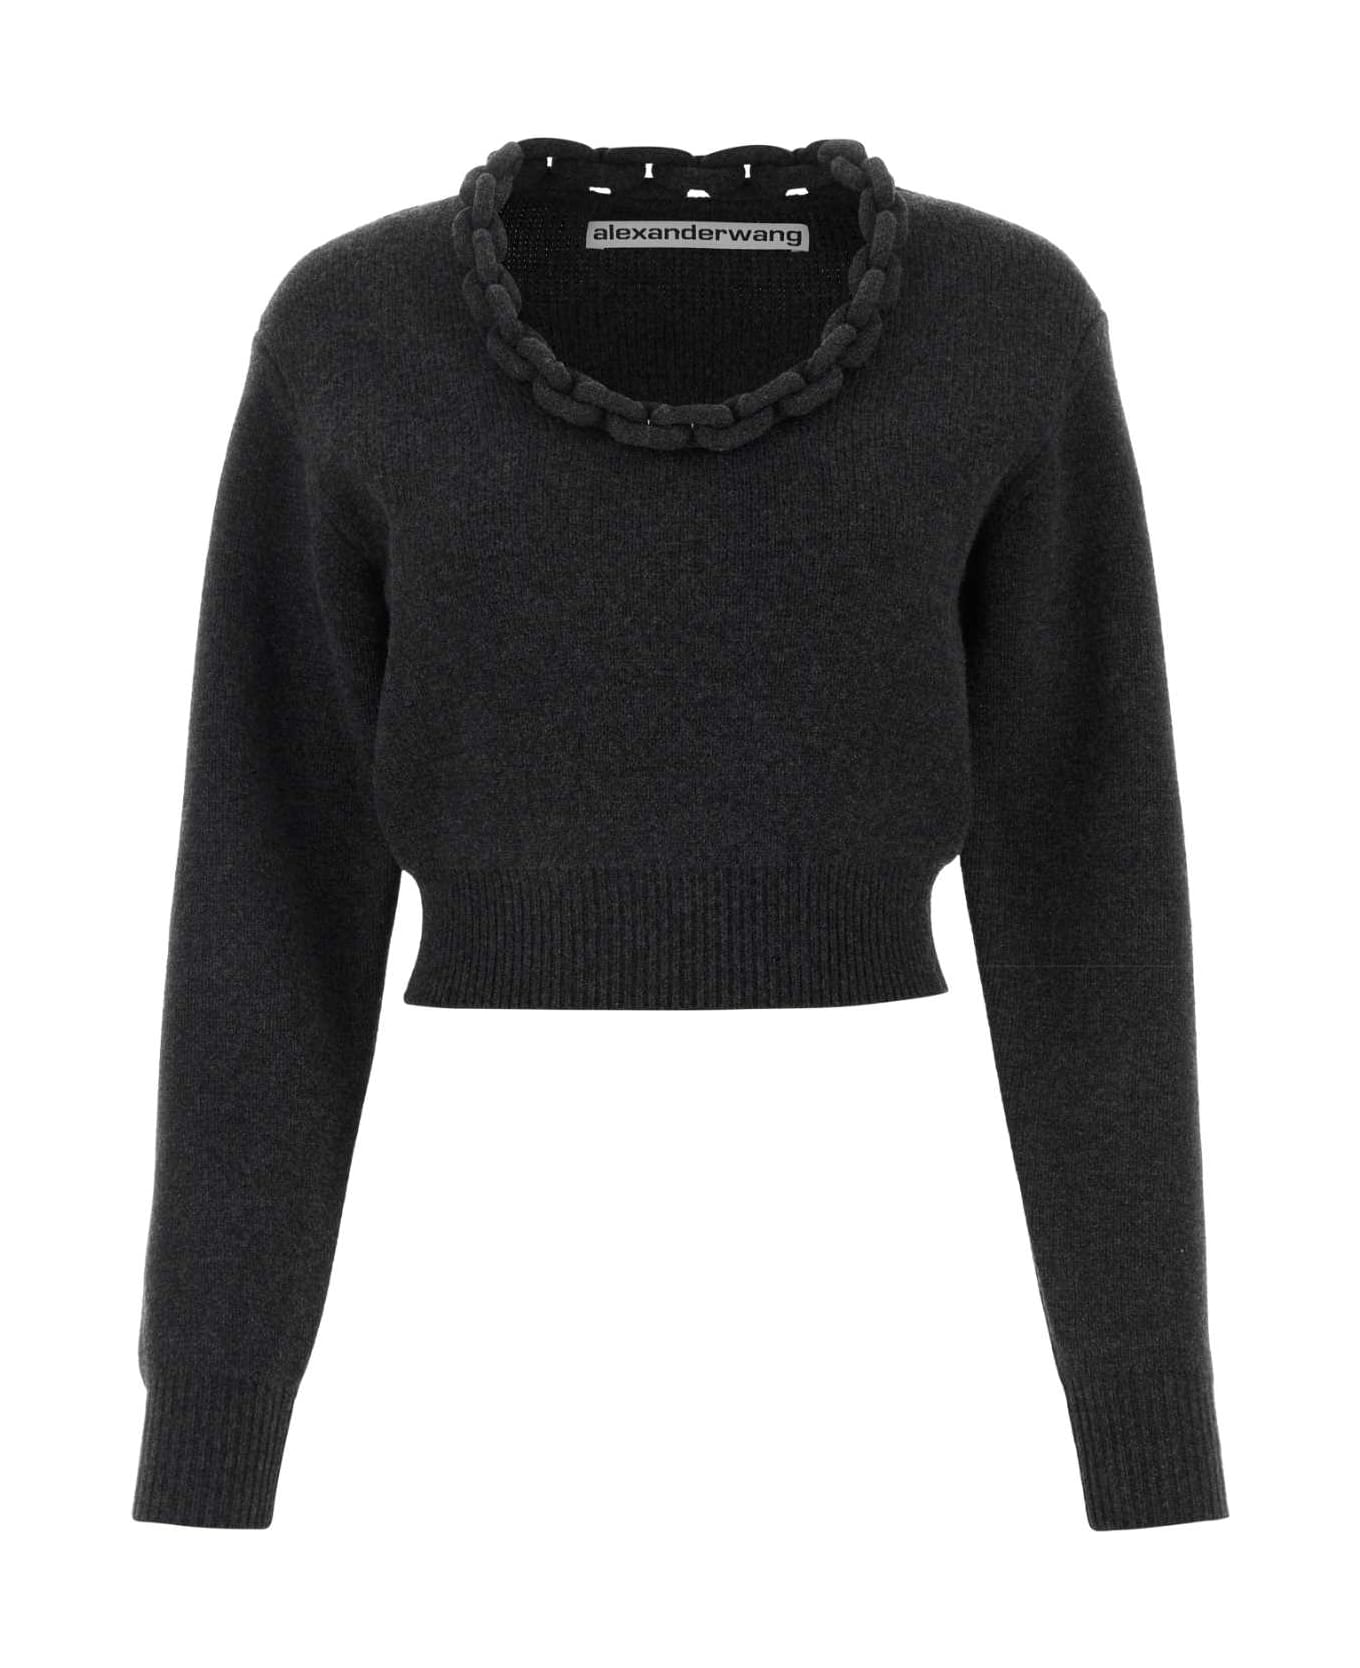 Alexander Wang Graphite Wool Blend Sweater - CHARCOALMELANGE